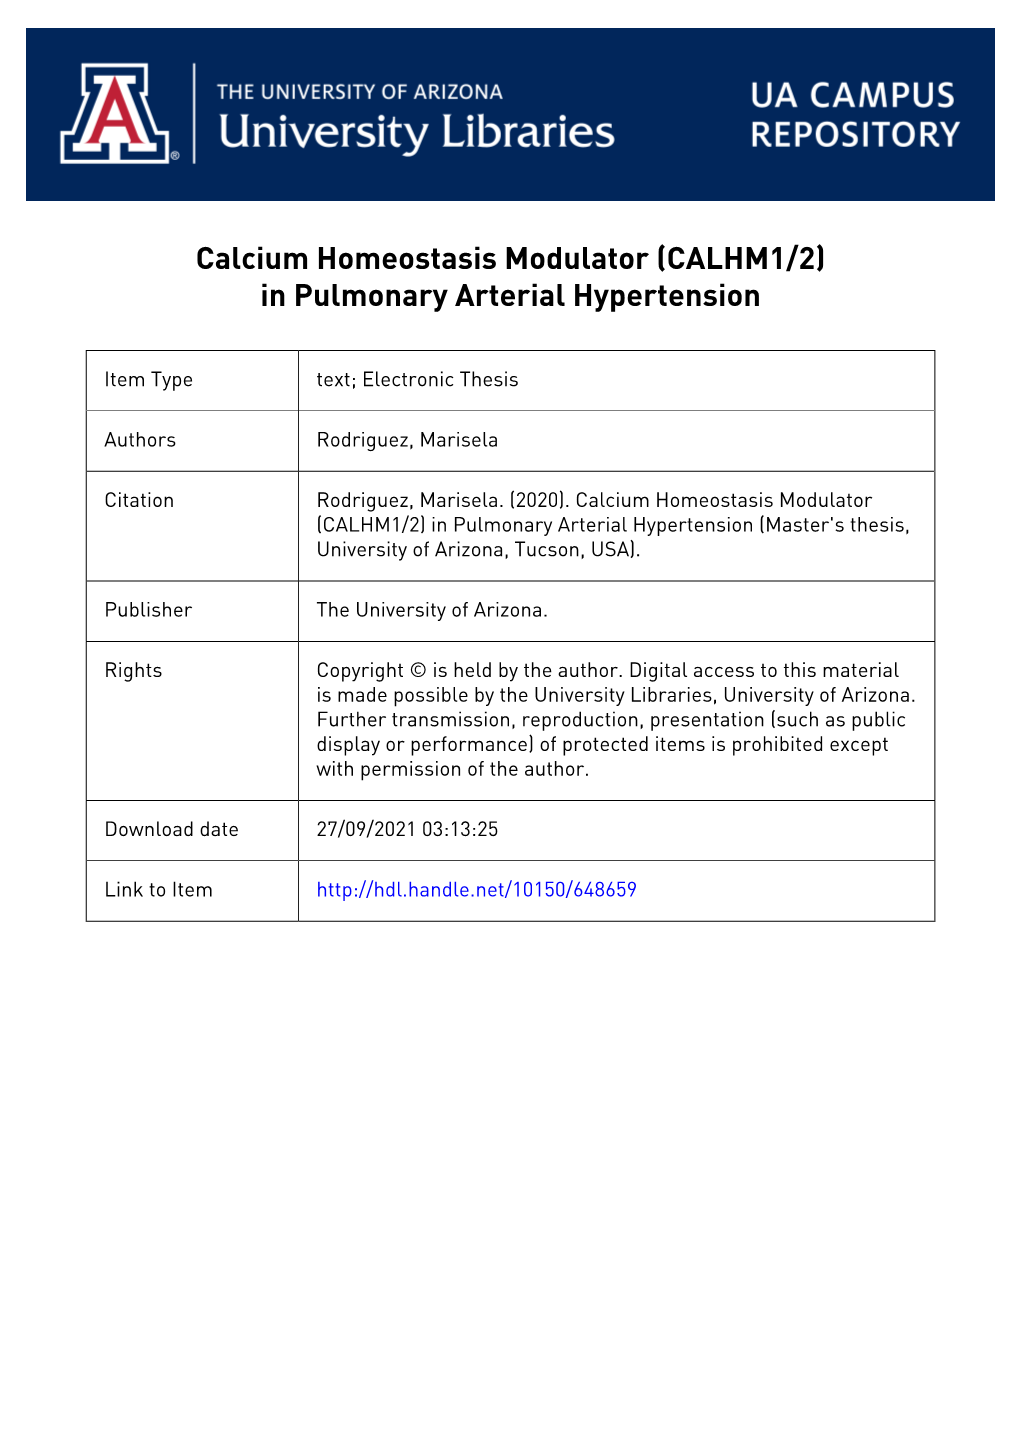 Calcium Homeostasis Modulator (CALHM1/2) in Pulmonary Arterial Hypertension